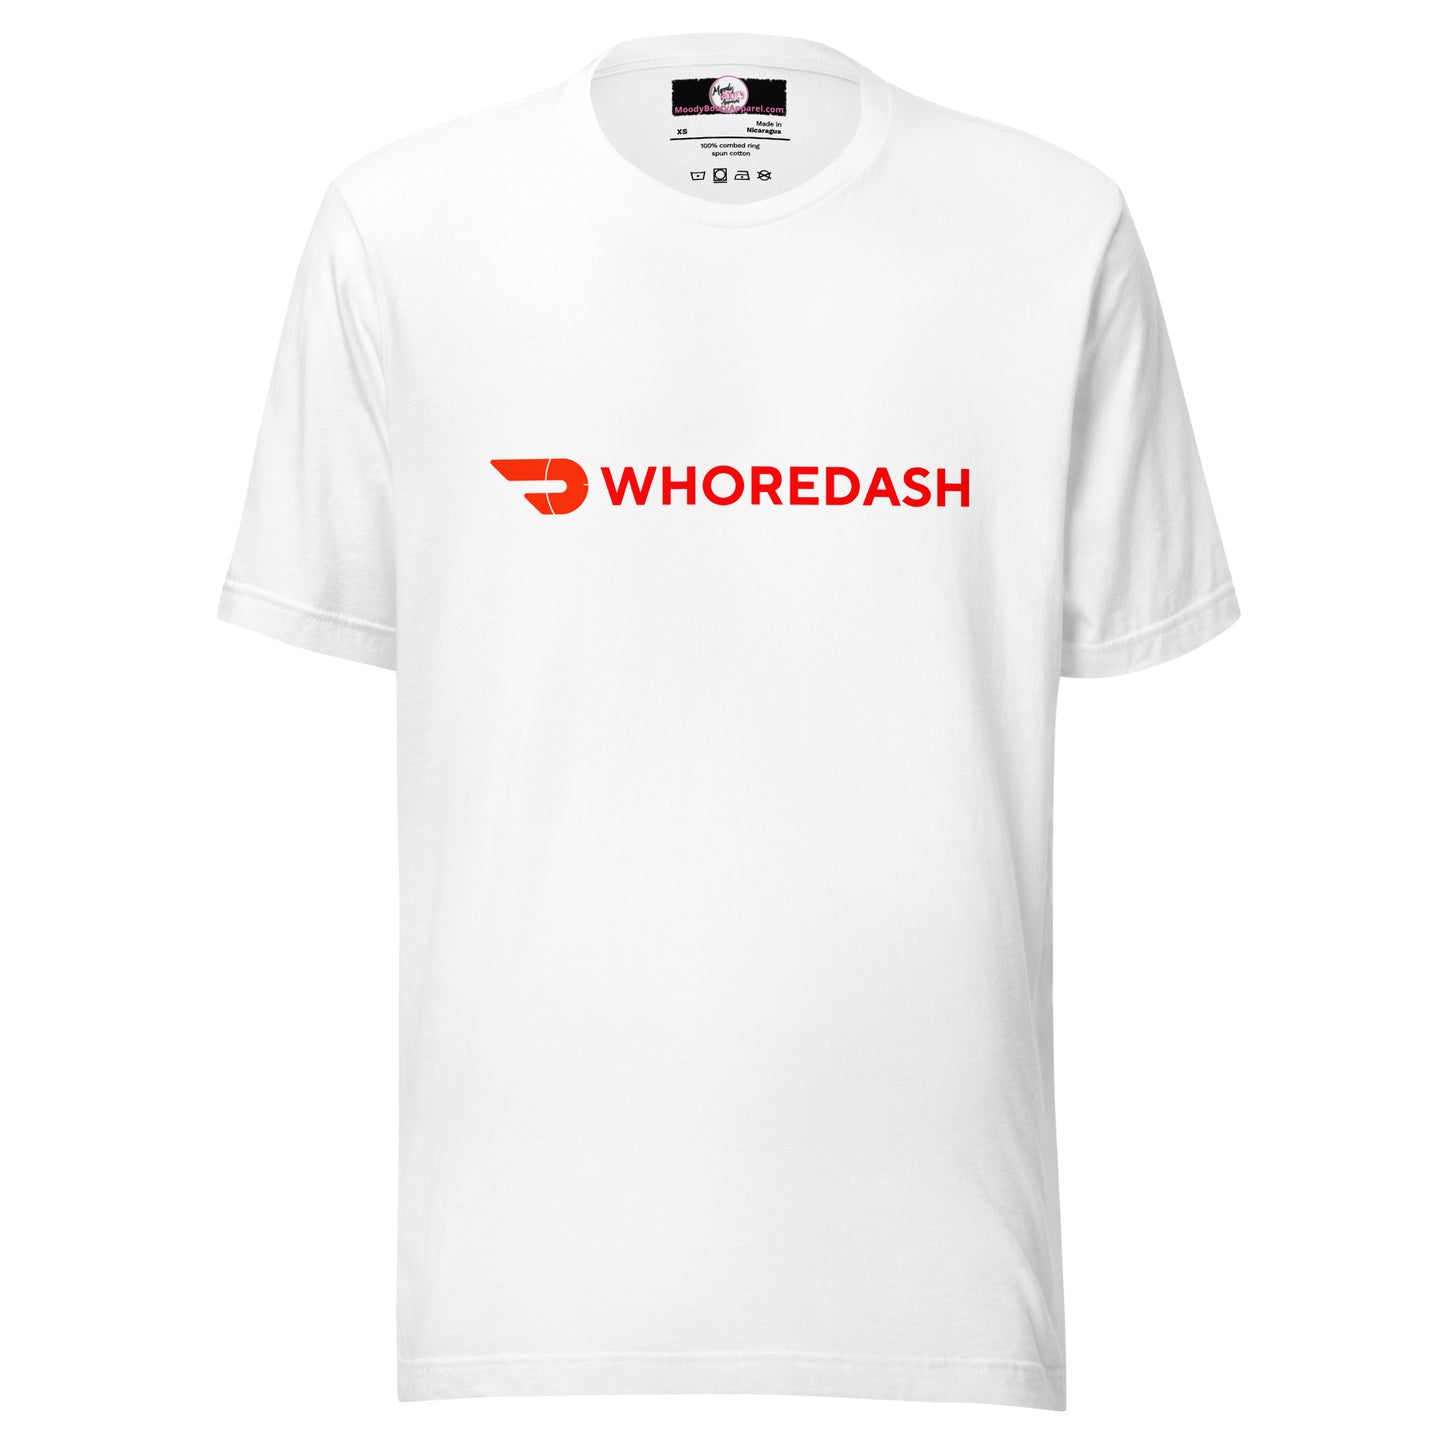 WHOREDASH - Unisex t-shirt